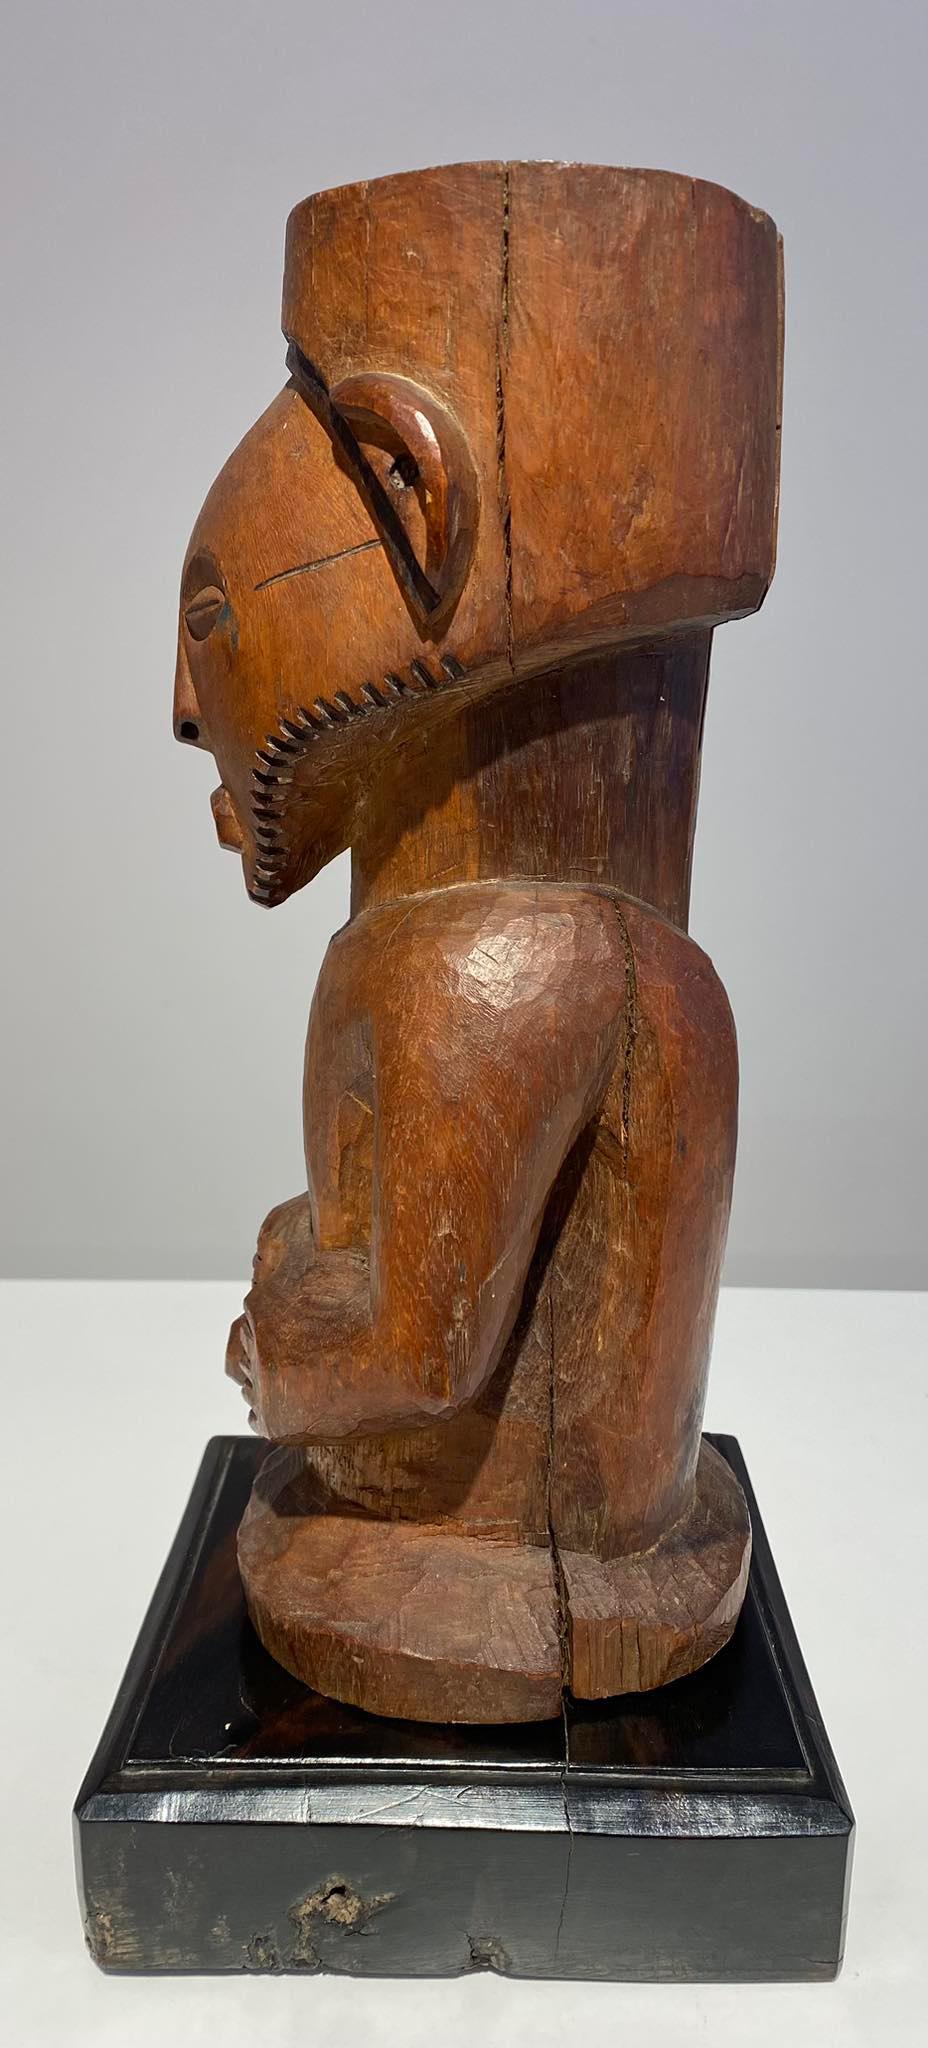 Kusu wooden ancestor fetish ca 1900 DR Congo Africa Central African Tribal Art For Sale 4